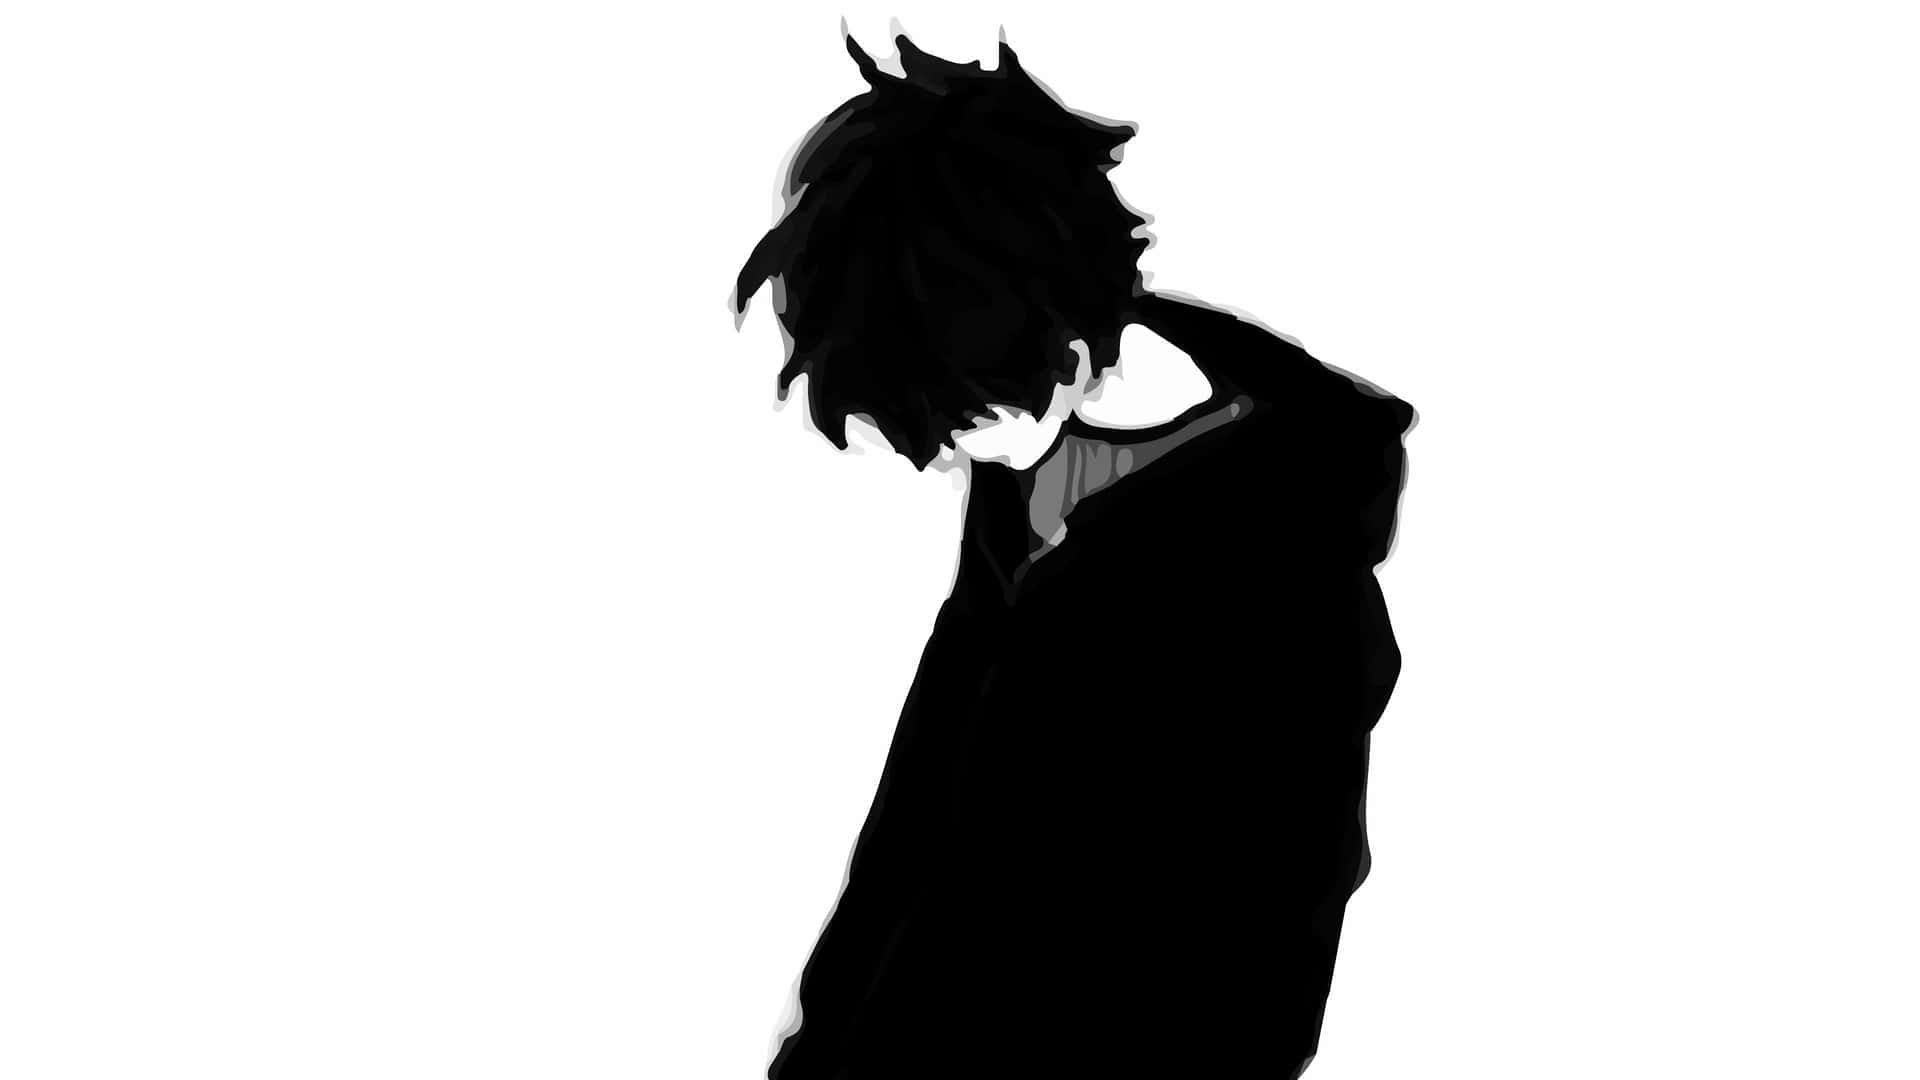 Sad anime boy pfp by GentlemanBeep on DeviantArt